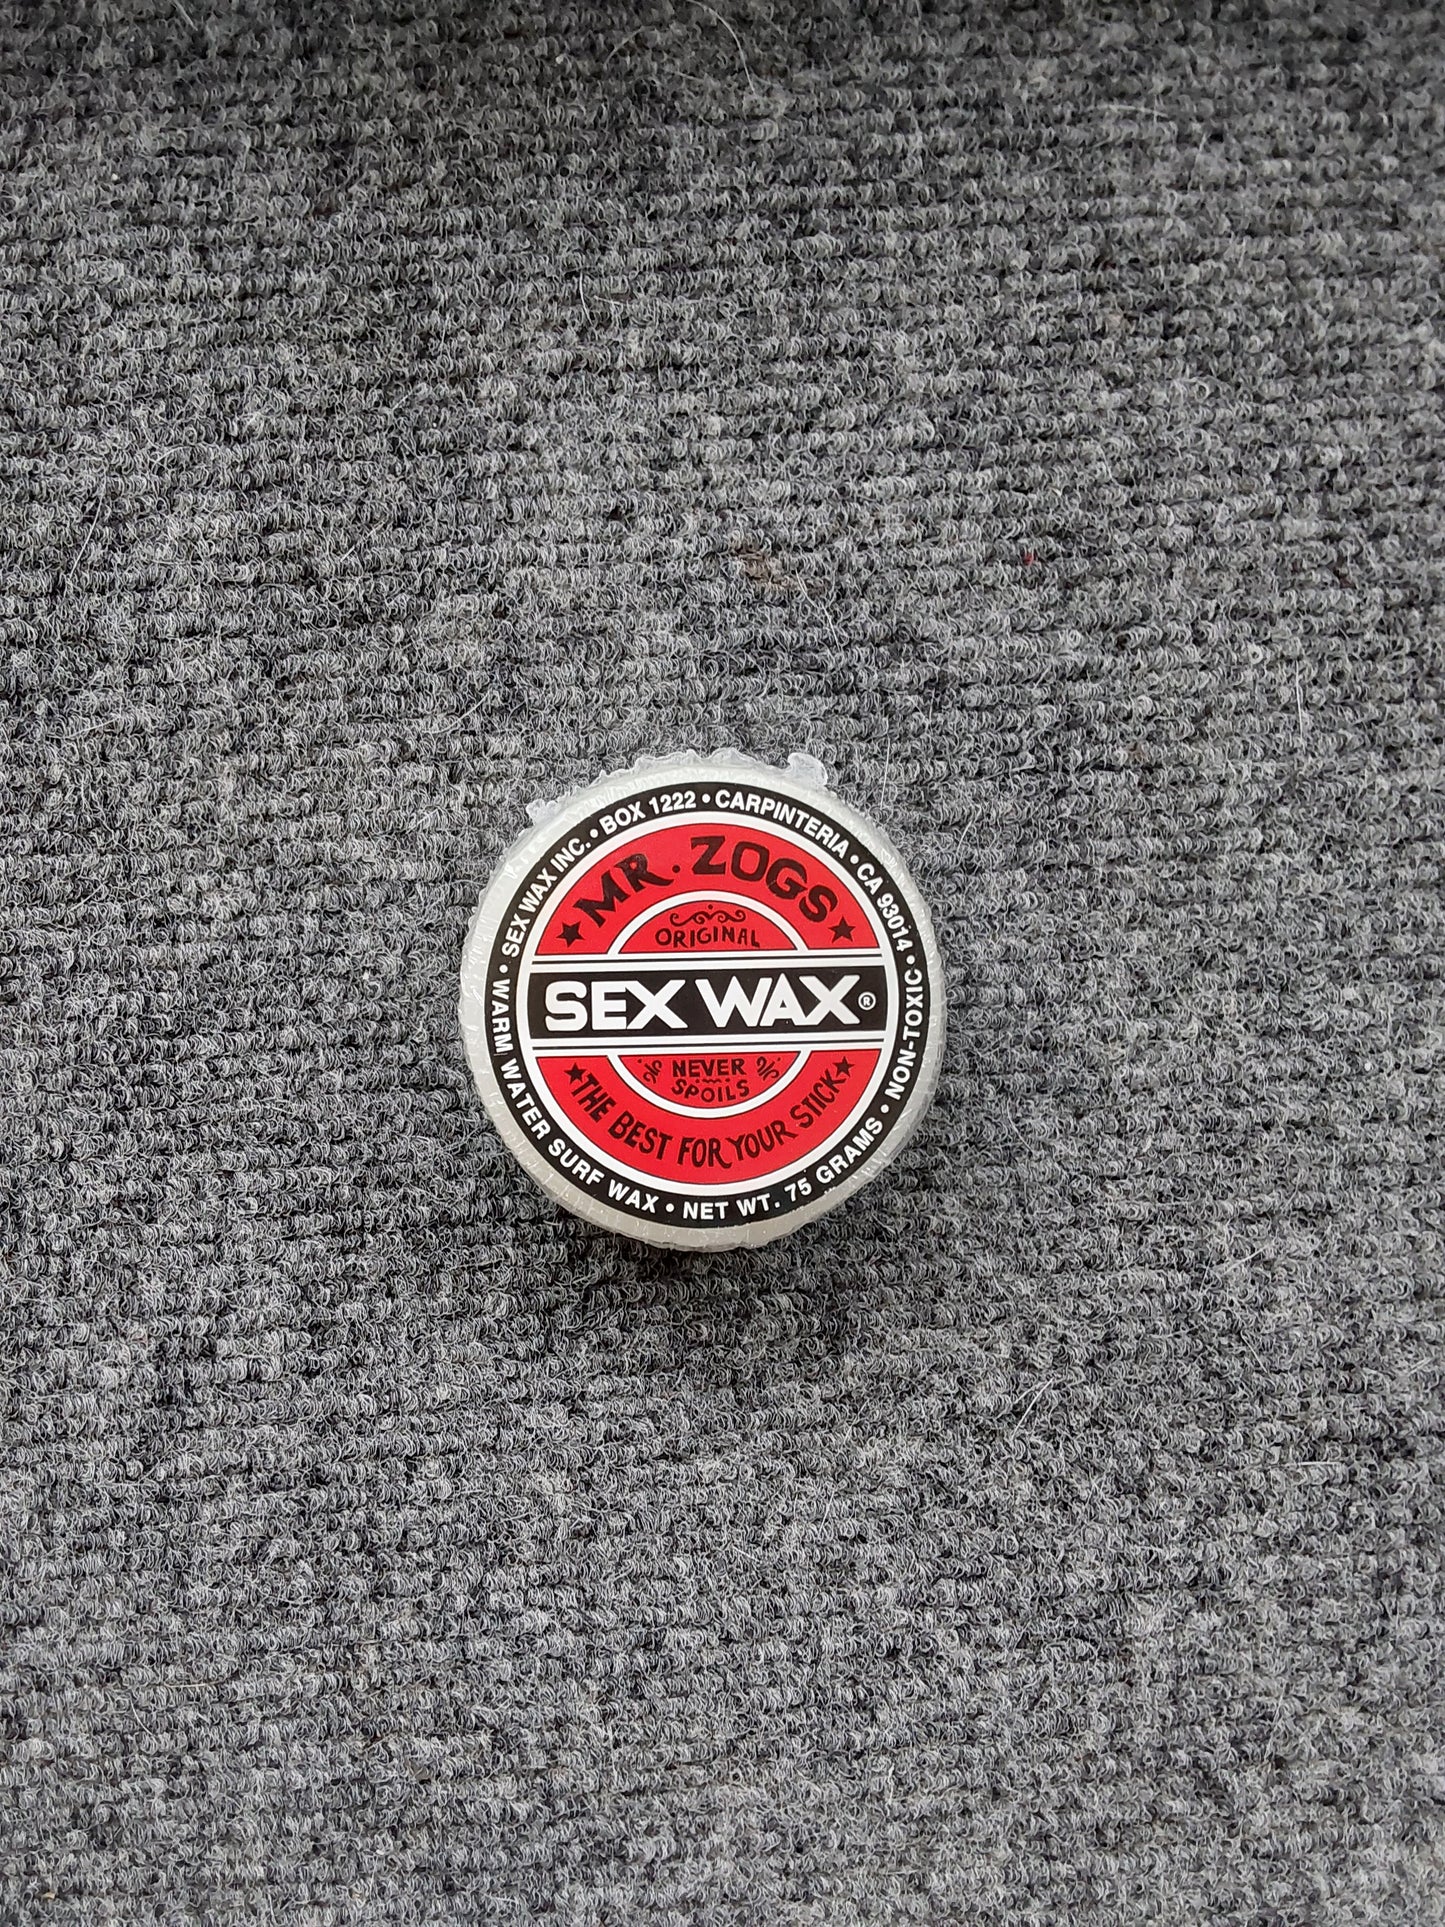 Sex Wax Original Single Bar